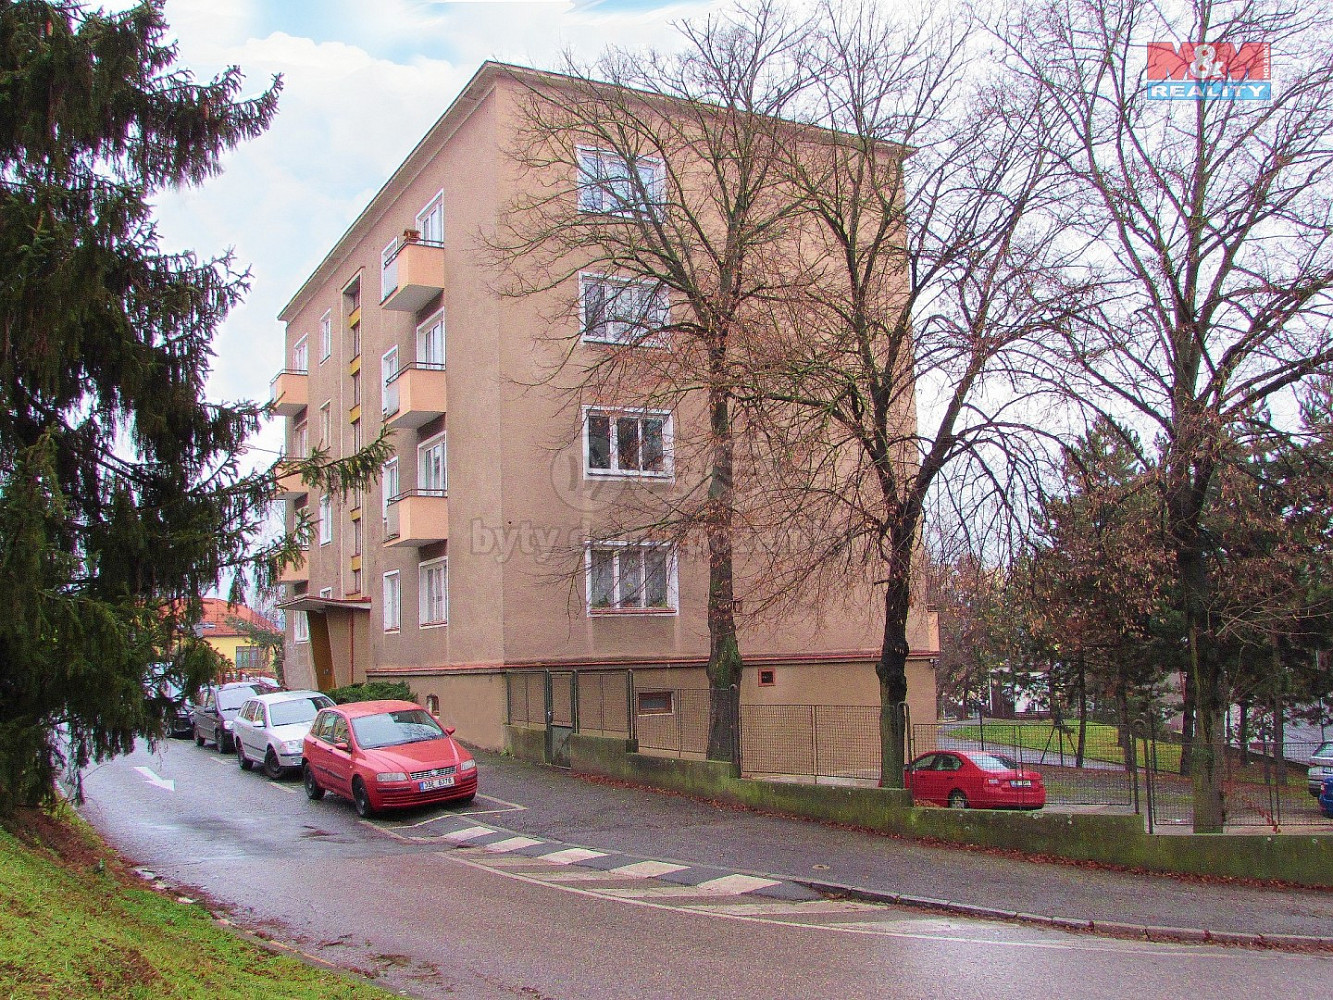 Plzeňská, Beroun - Beroun-Město